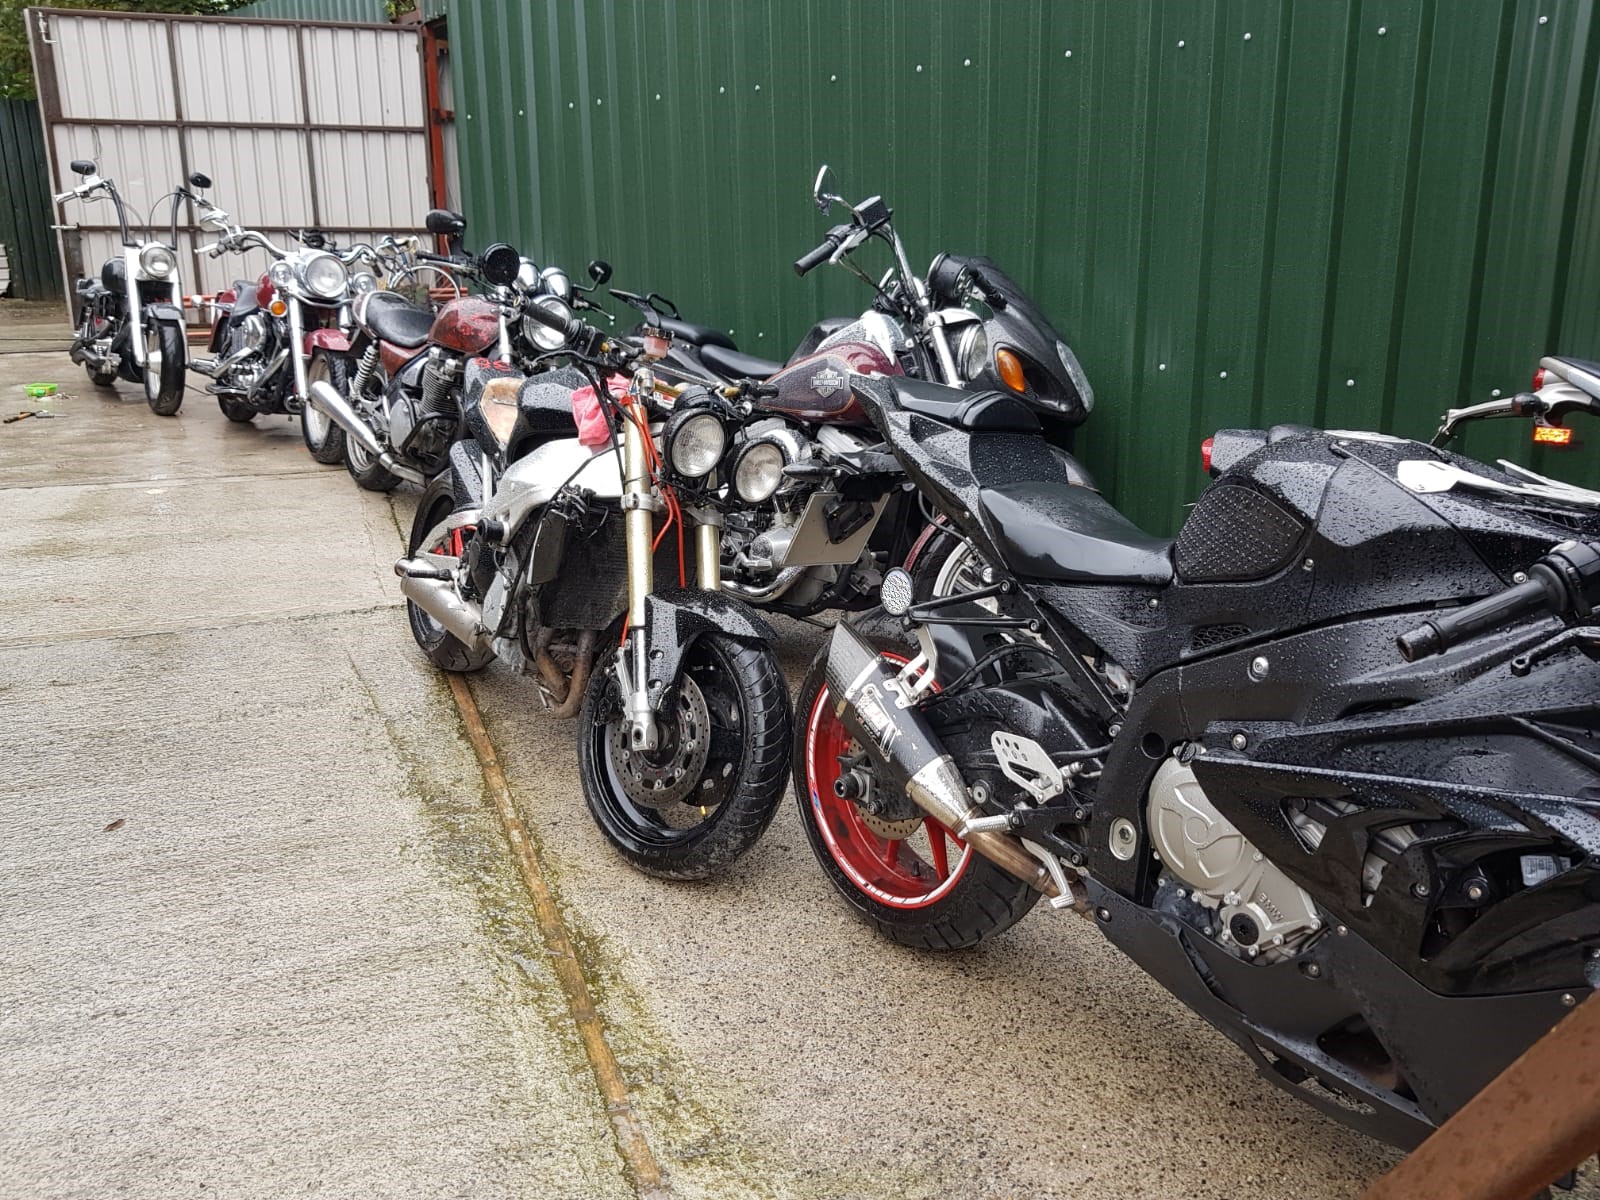 Motorbikes seized during CAB raids in Dublin